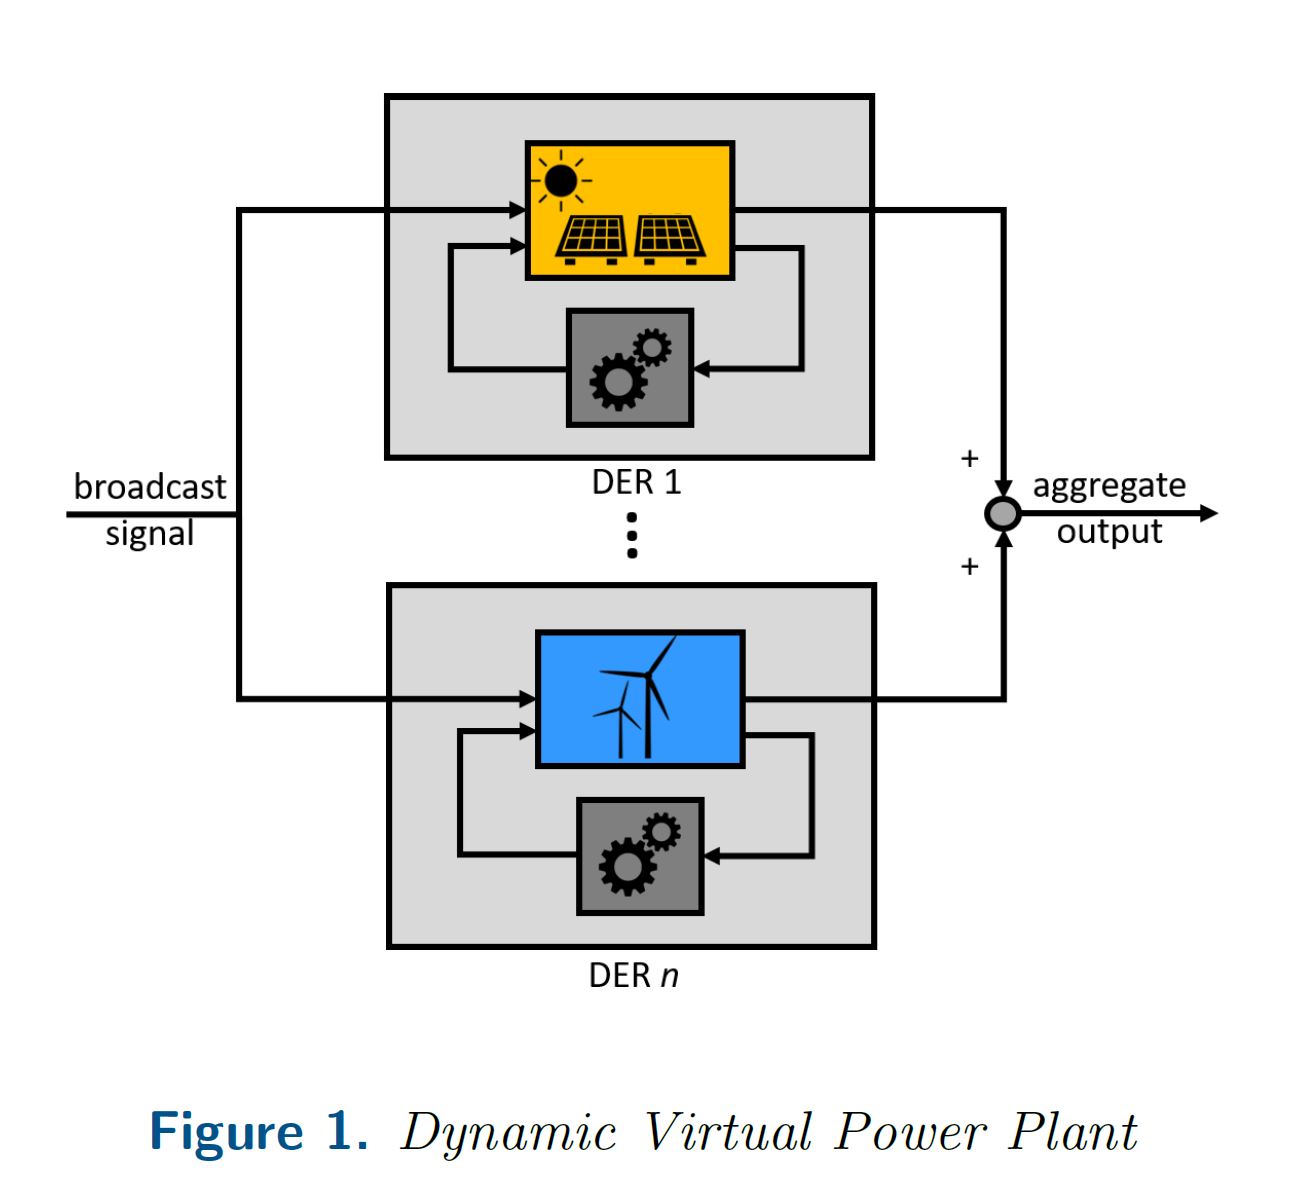 Figure 1: Dynamic Virtual Power Plant